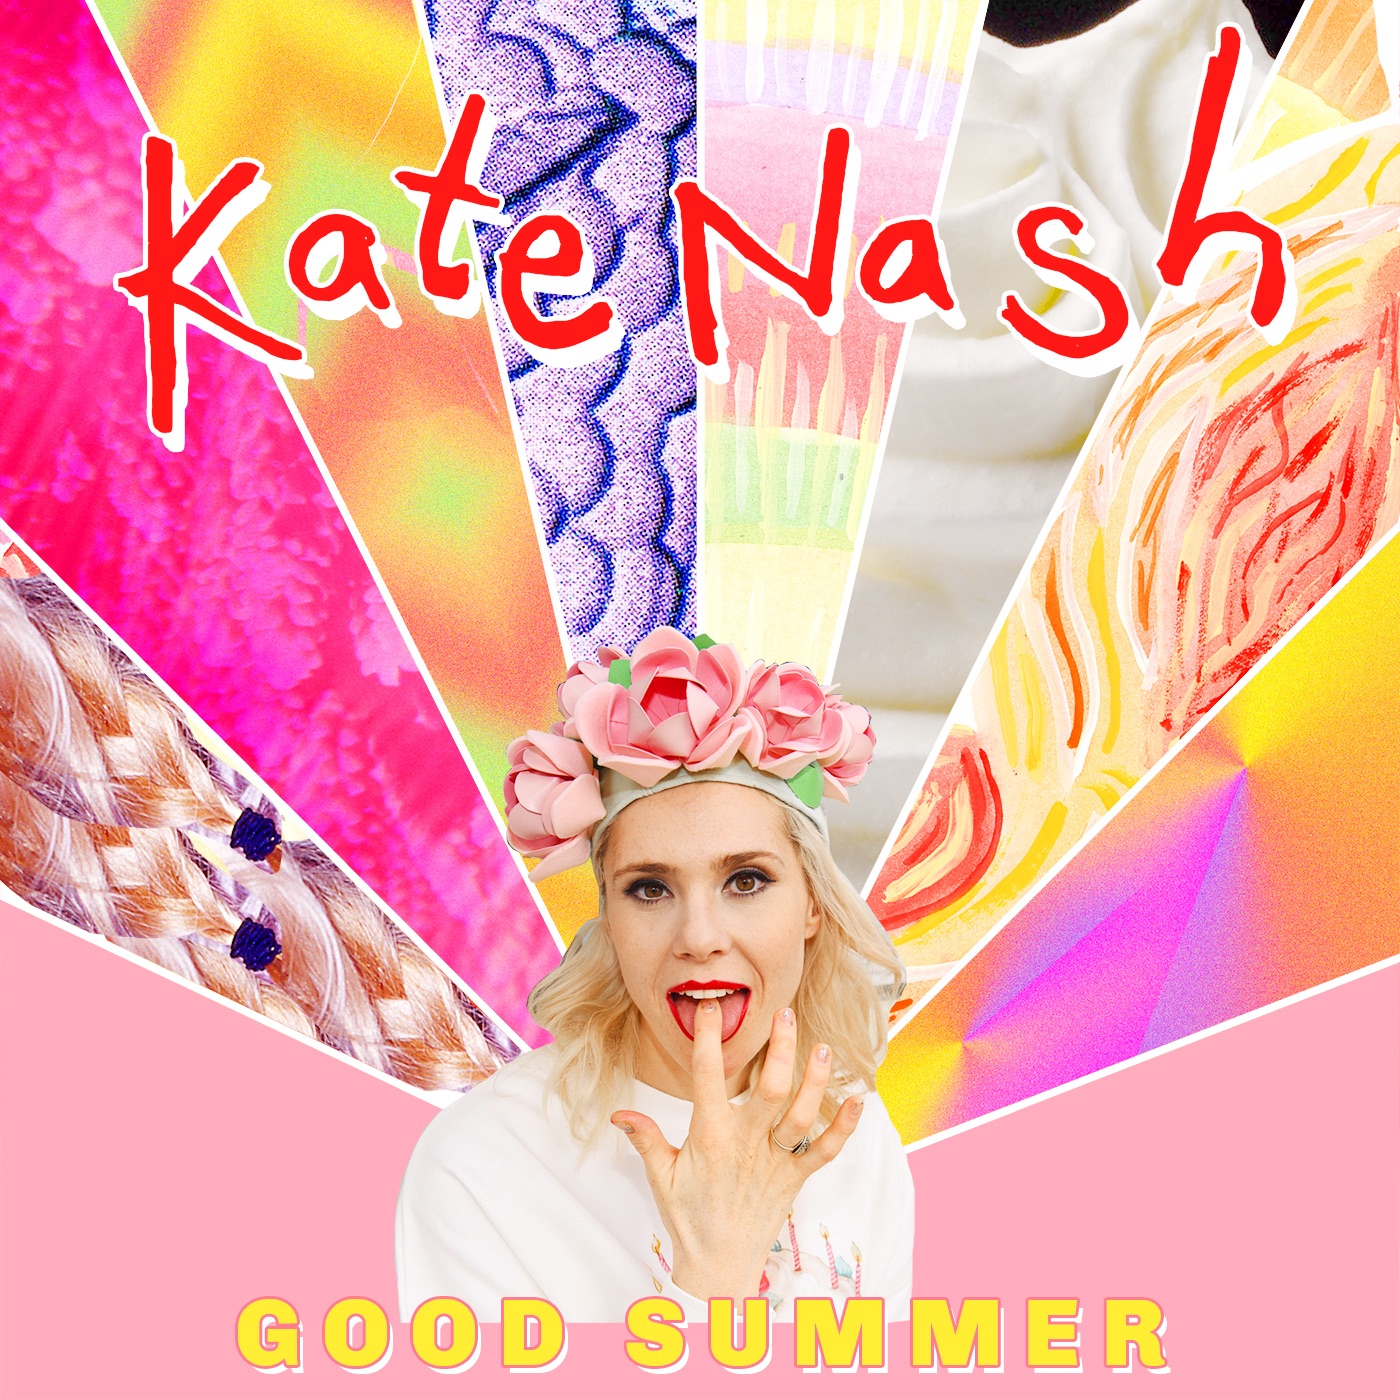 Kate Nash — Good Summer cover artwork